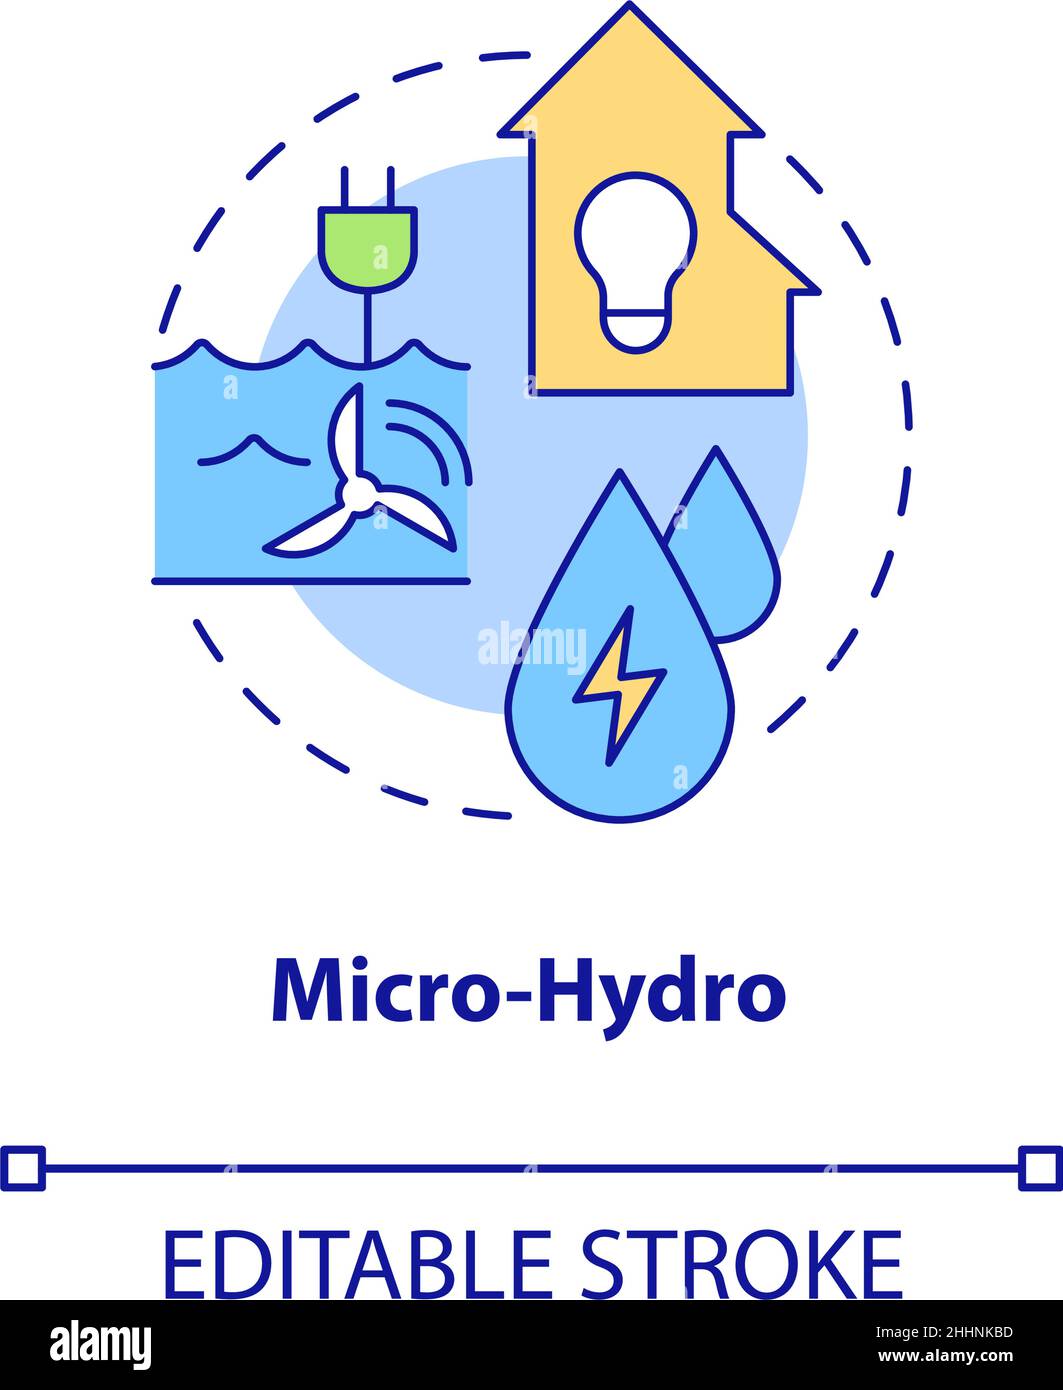 Micro hydro concept icon Stock Vector